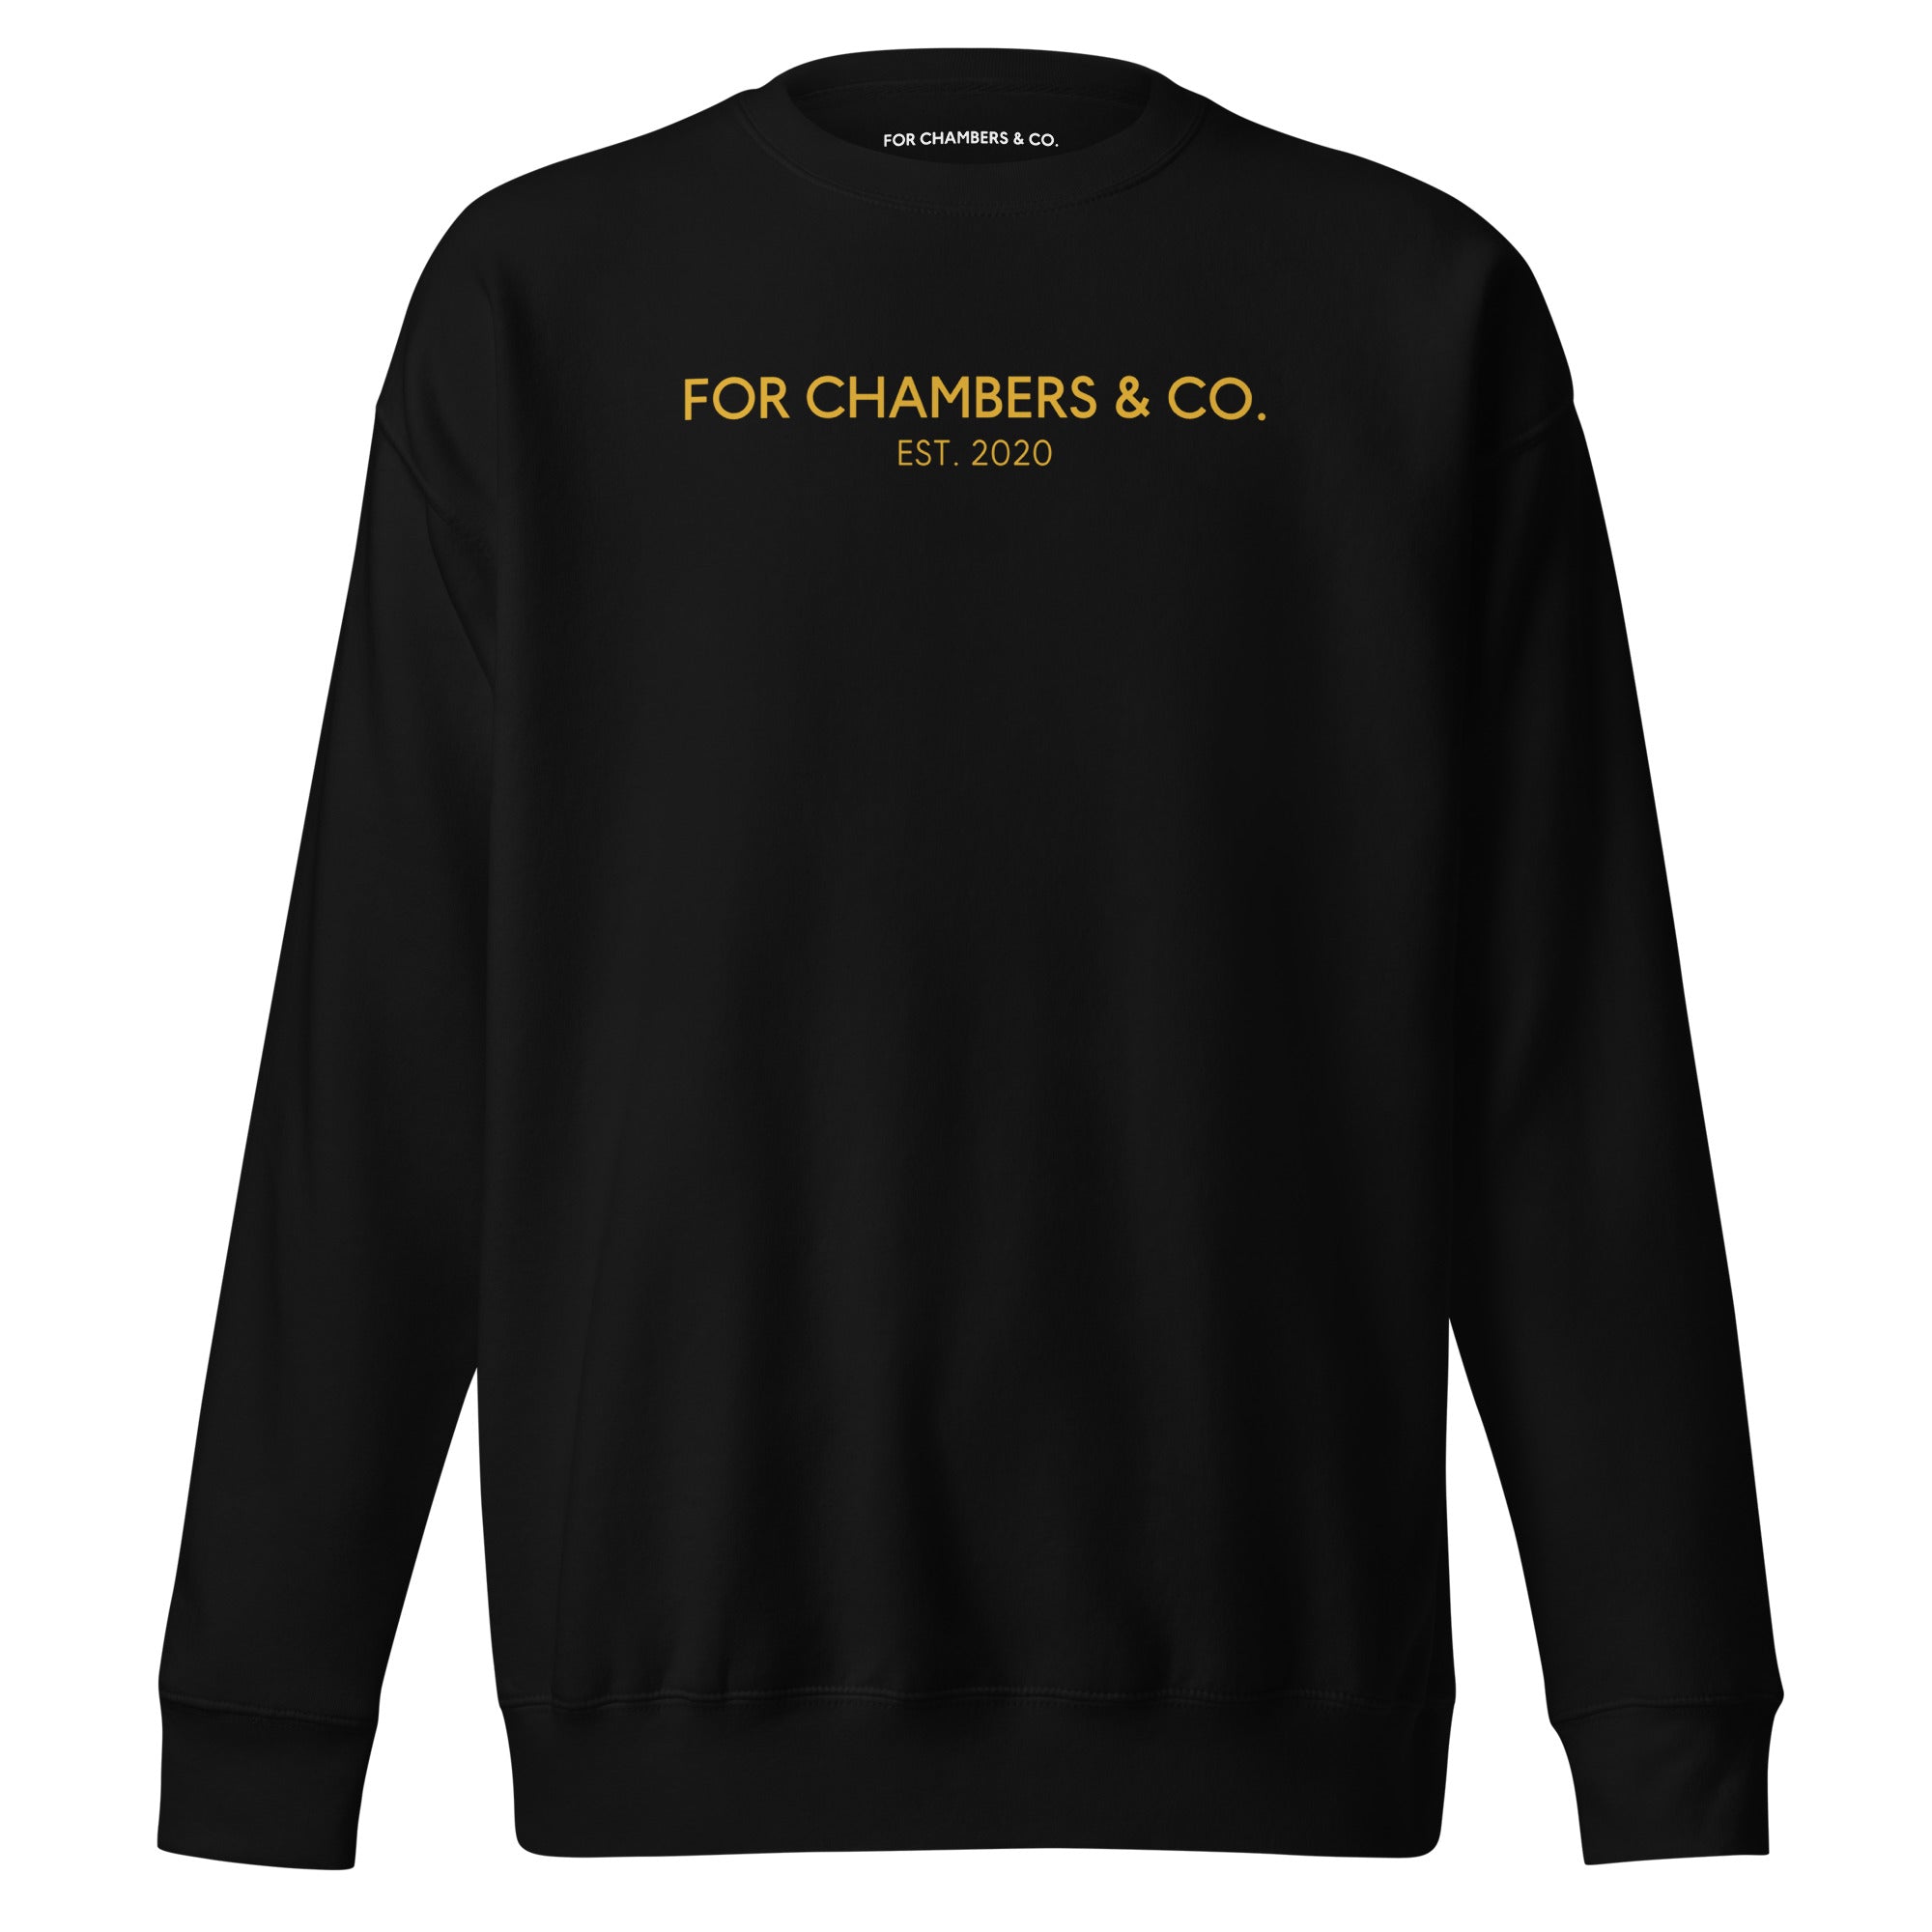 FOR CHAMBERS & CO. Sweatshirt in Black